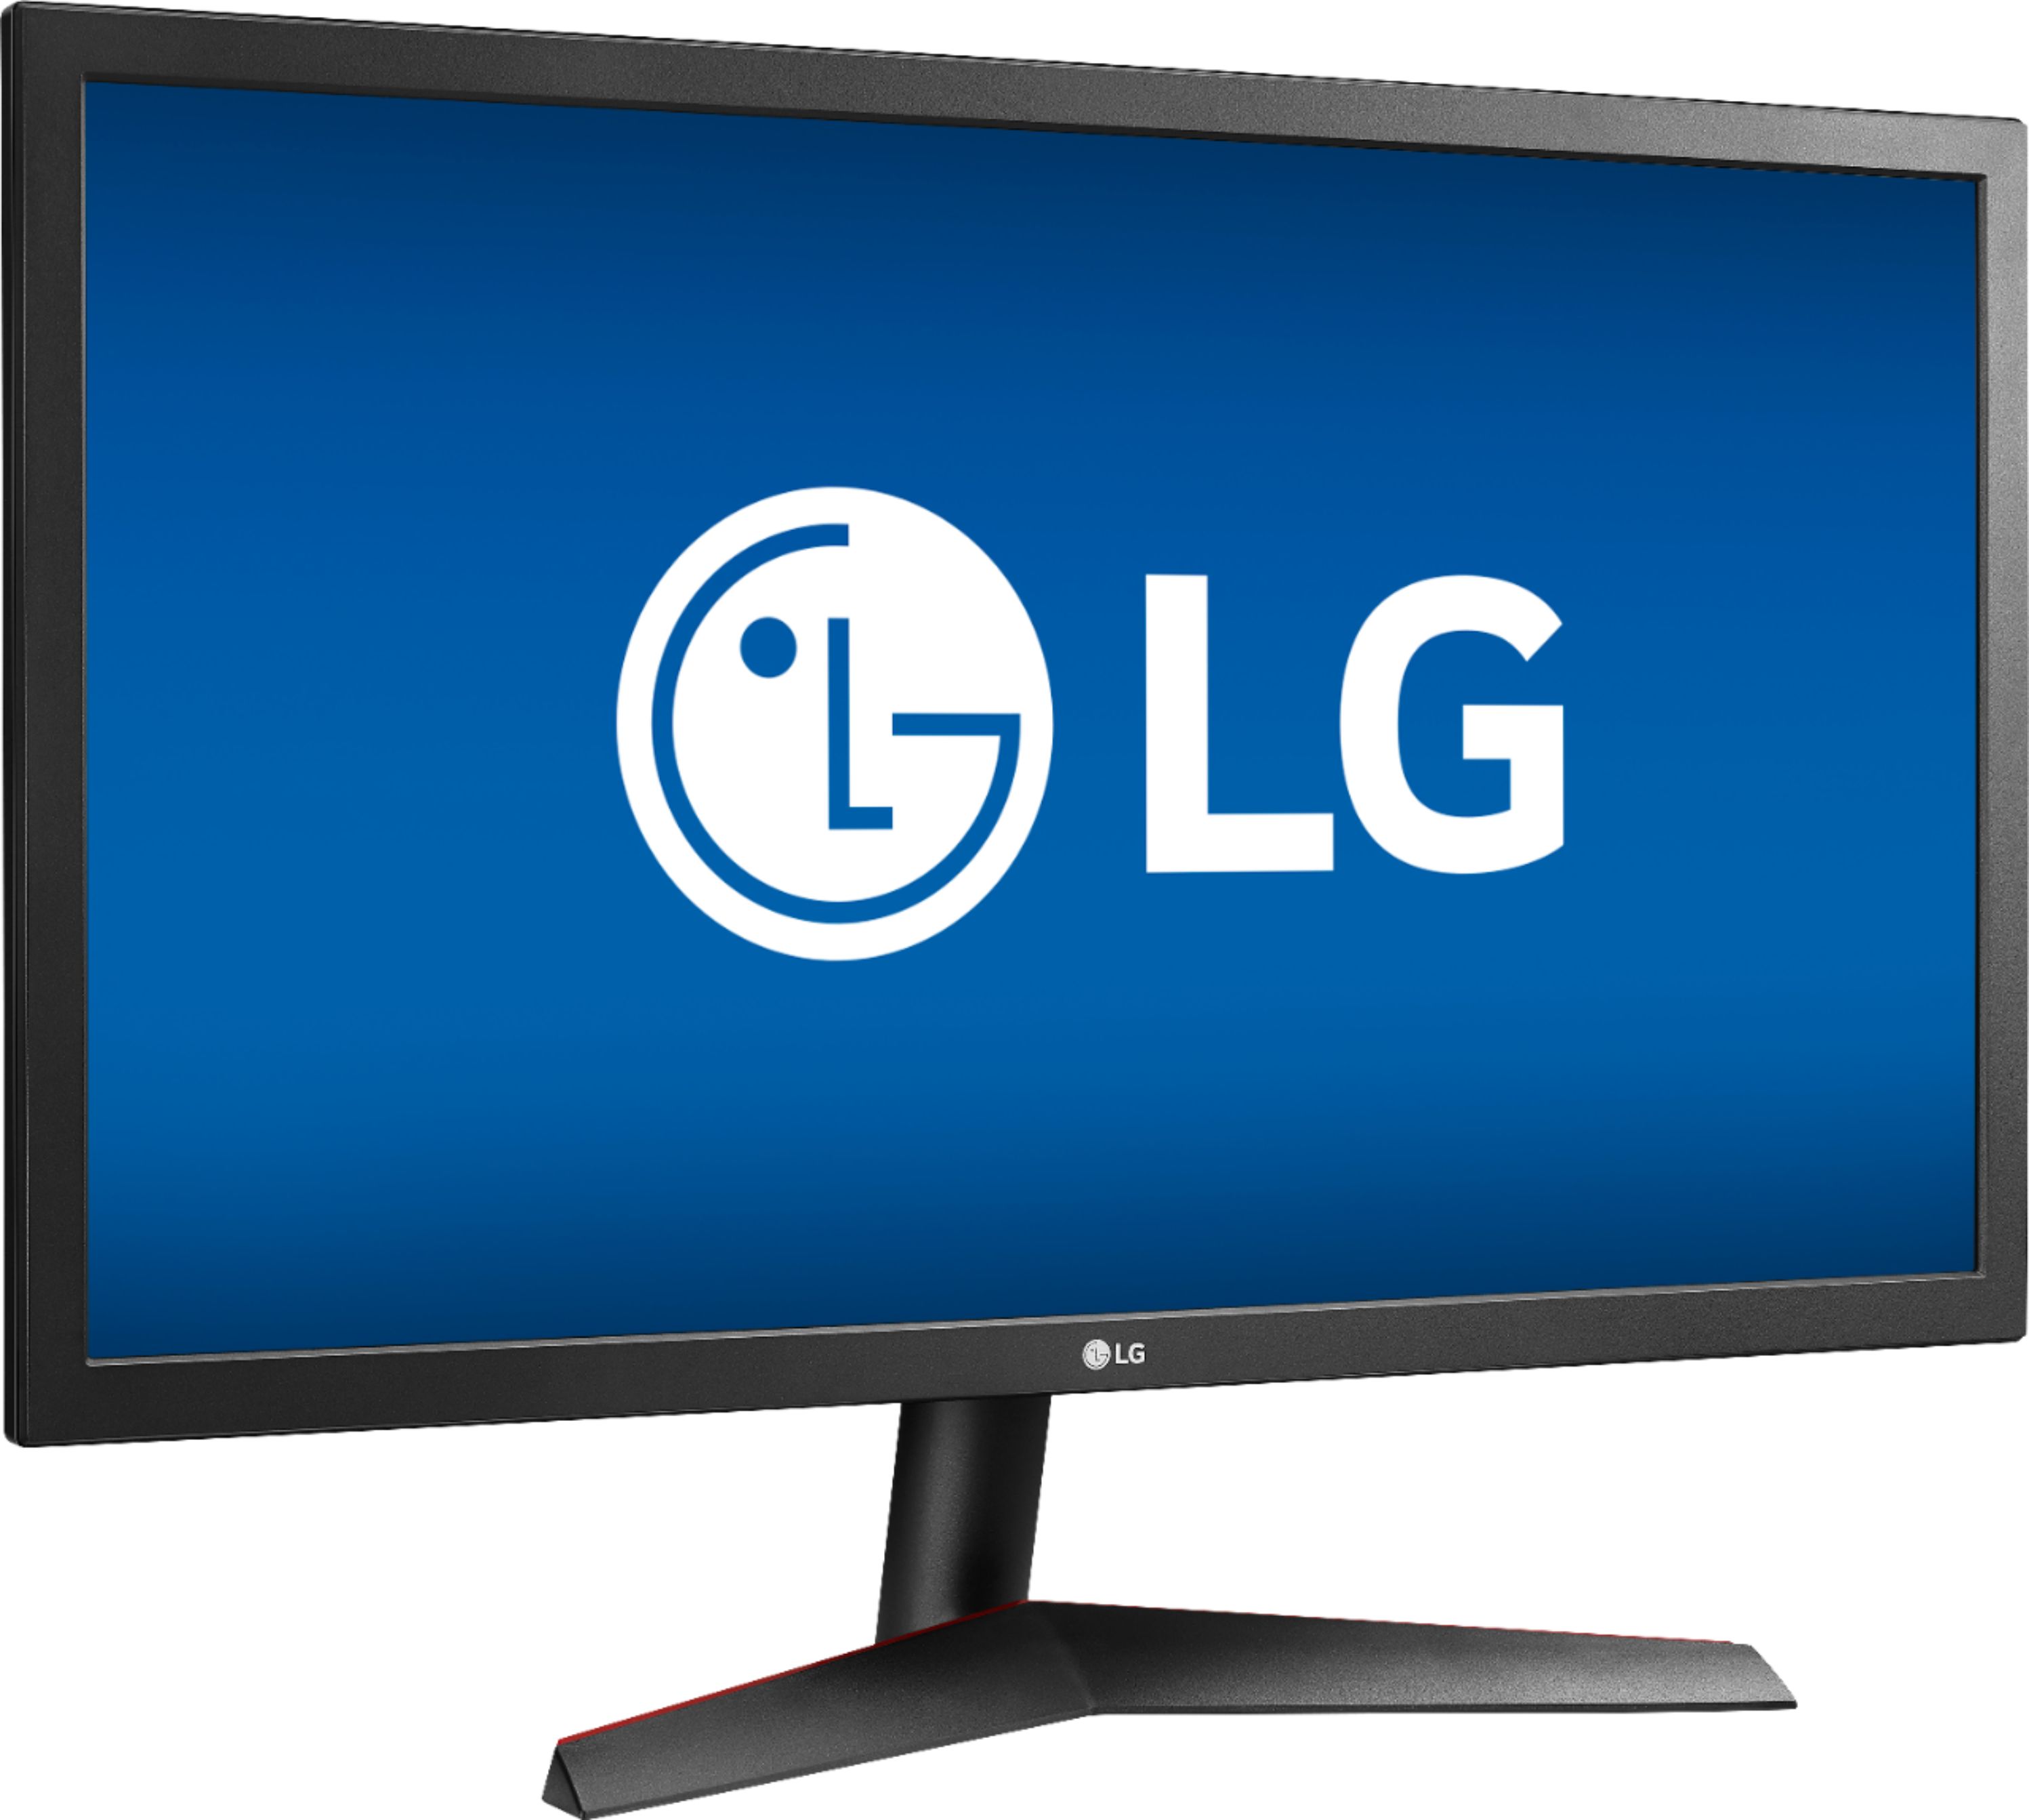 Angle View: LG - UltraGear 24" LED FHD FreeSync Monitor (DisplayPort, HDMI) - Black